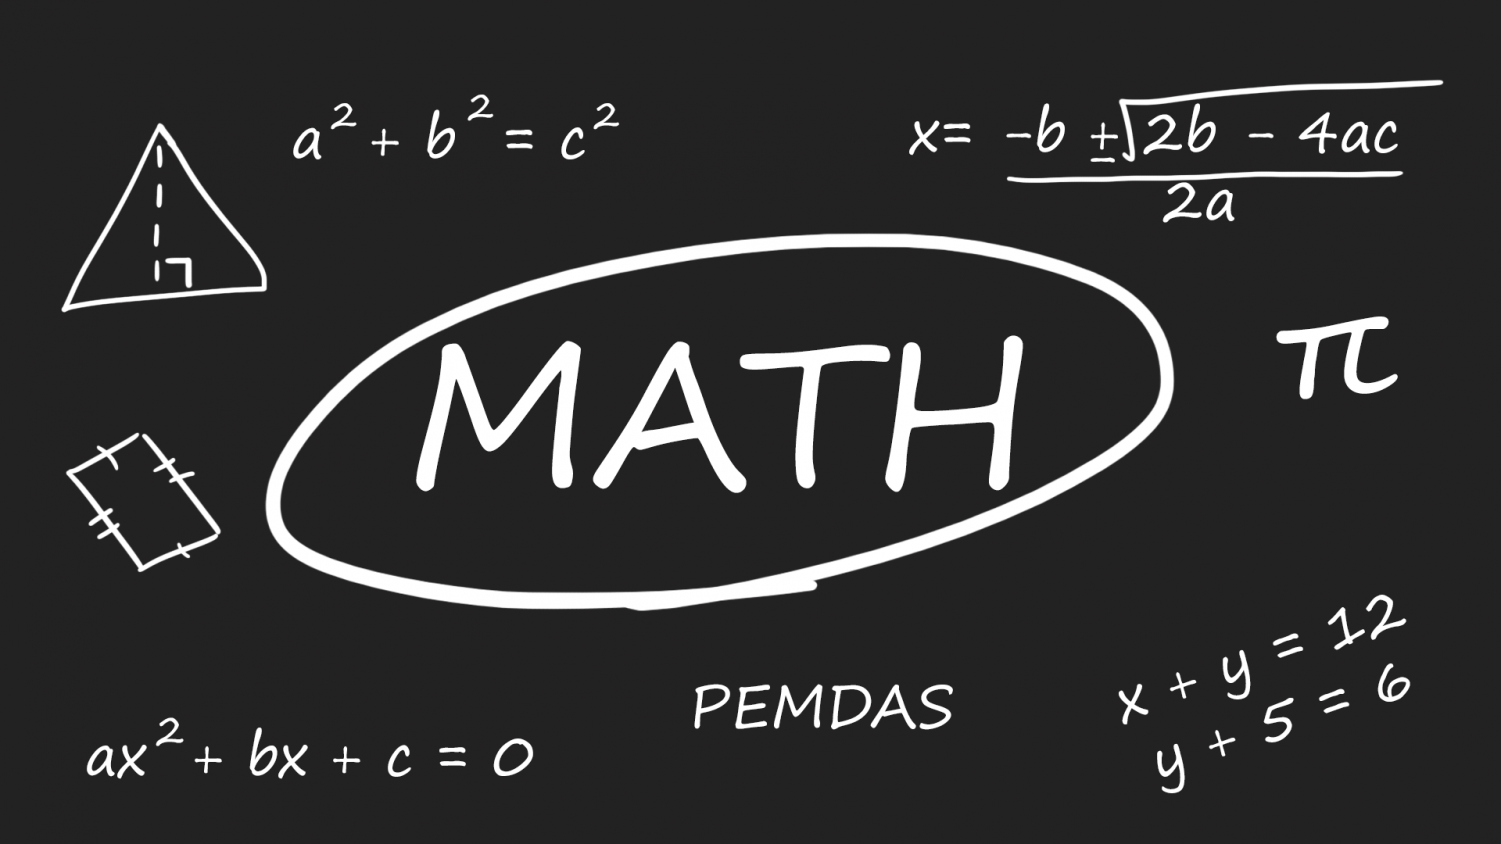 6 mathematics. Pemdas. In математика. Для профиля группы Math. Math надпись.